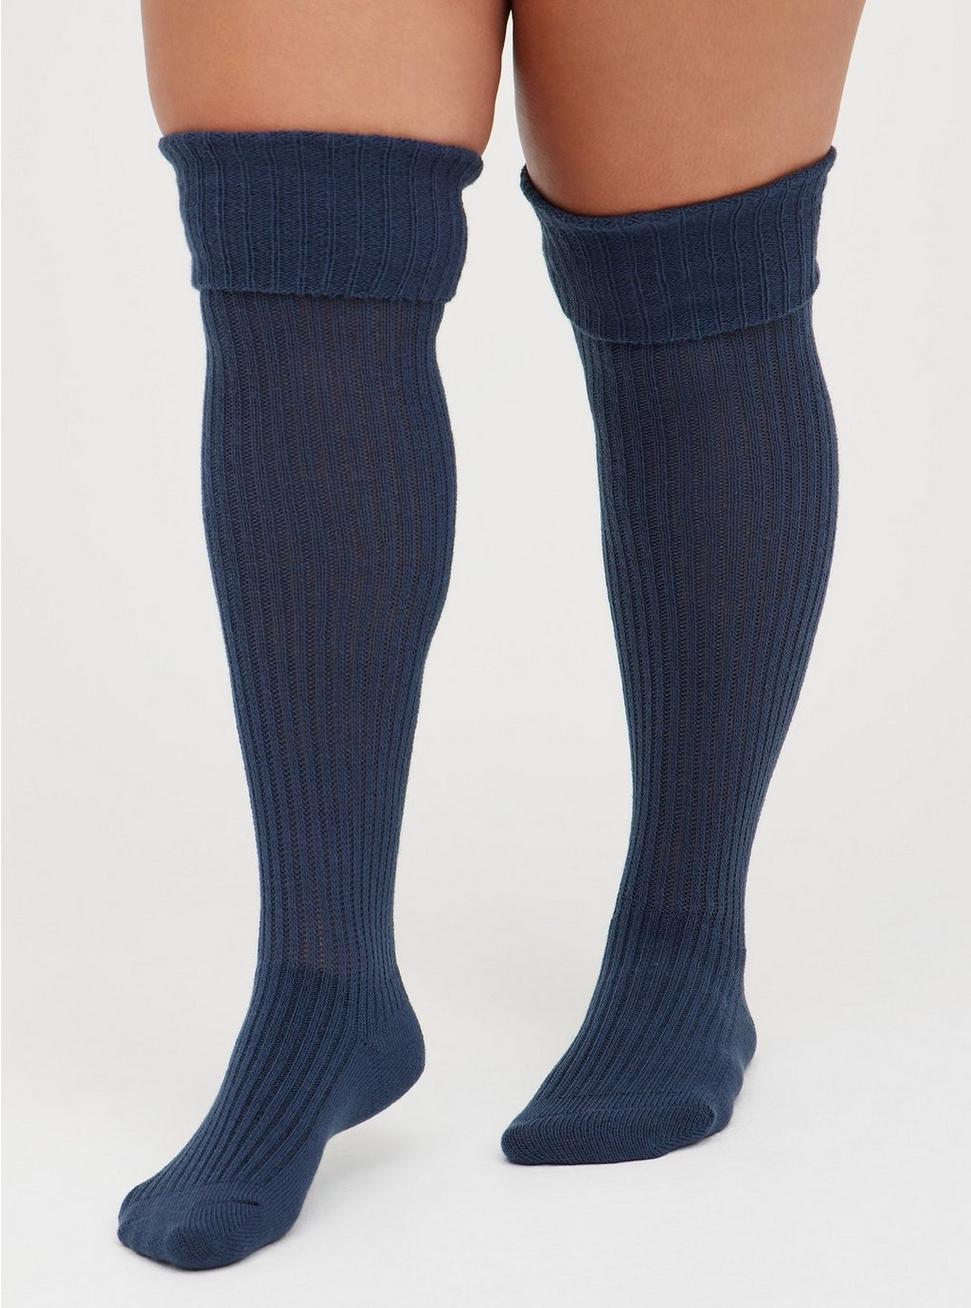 crystal jenkins recommends torrid knee high socks pic